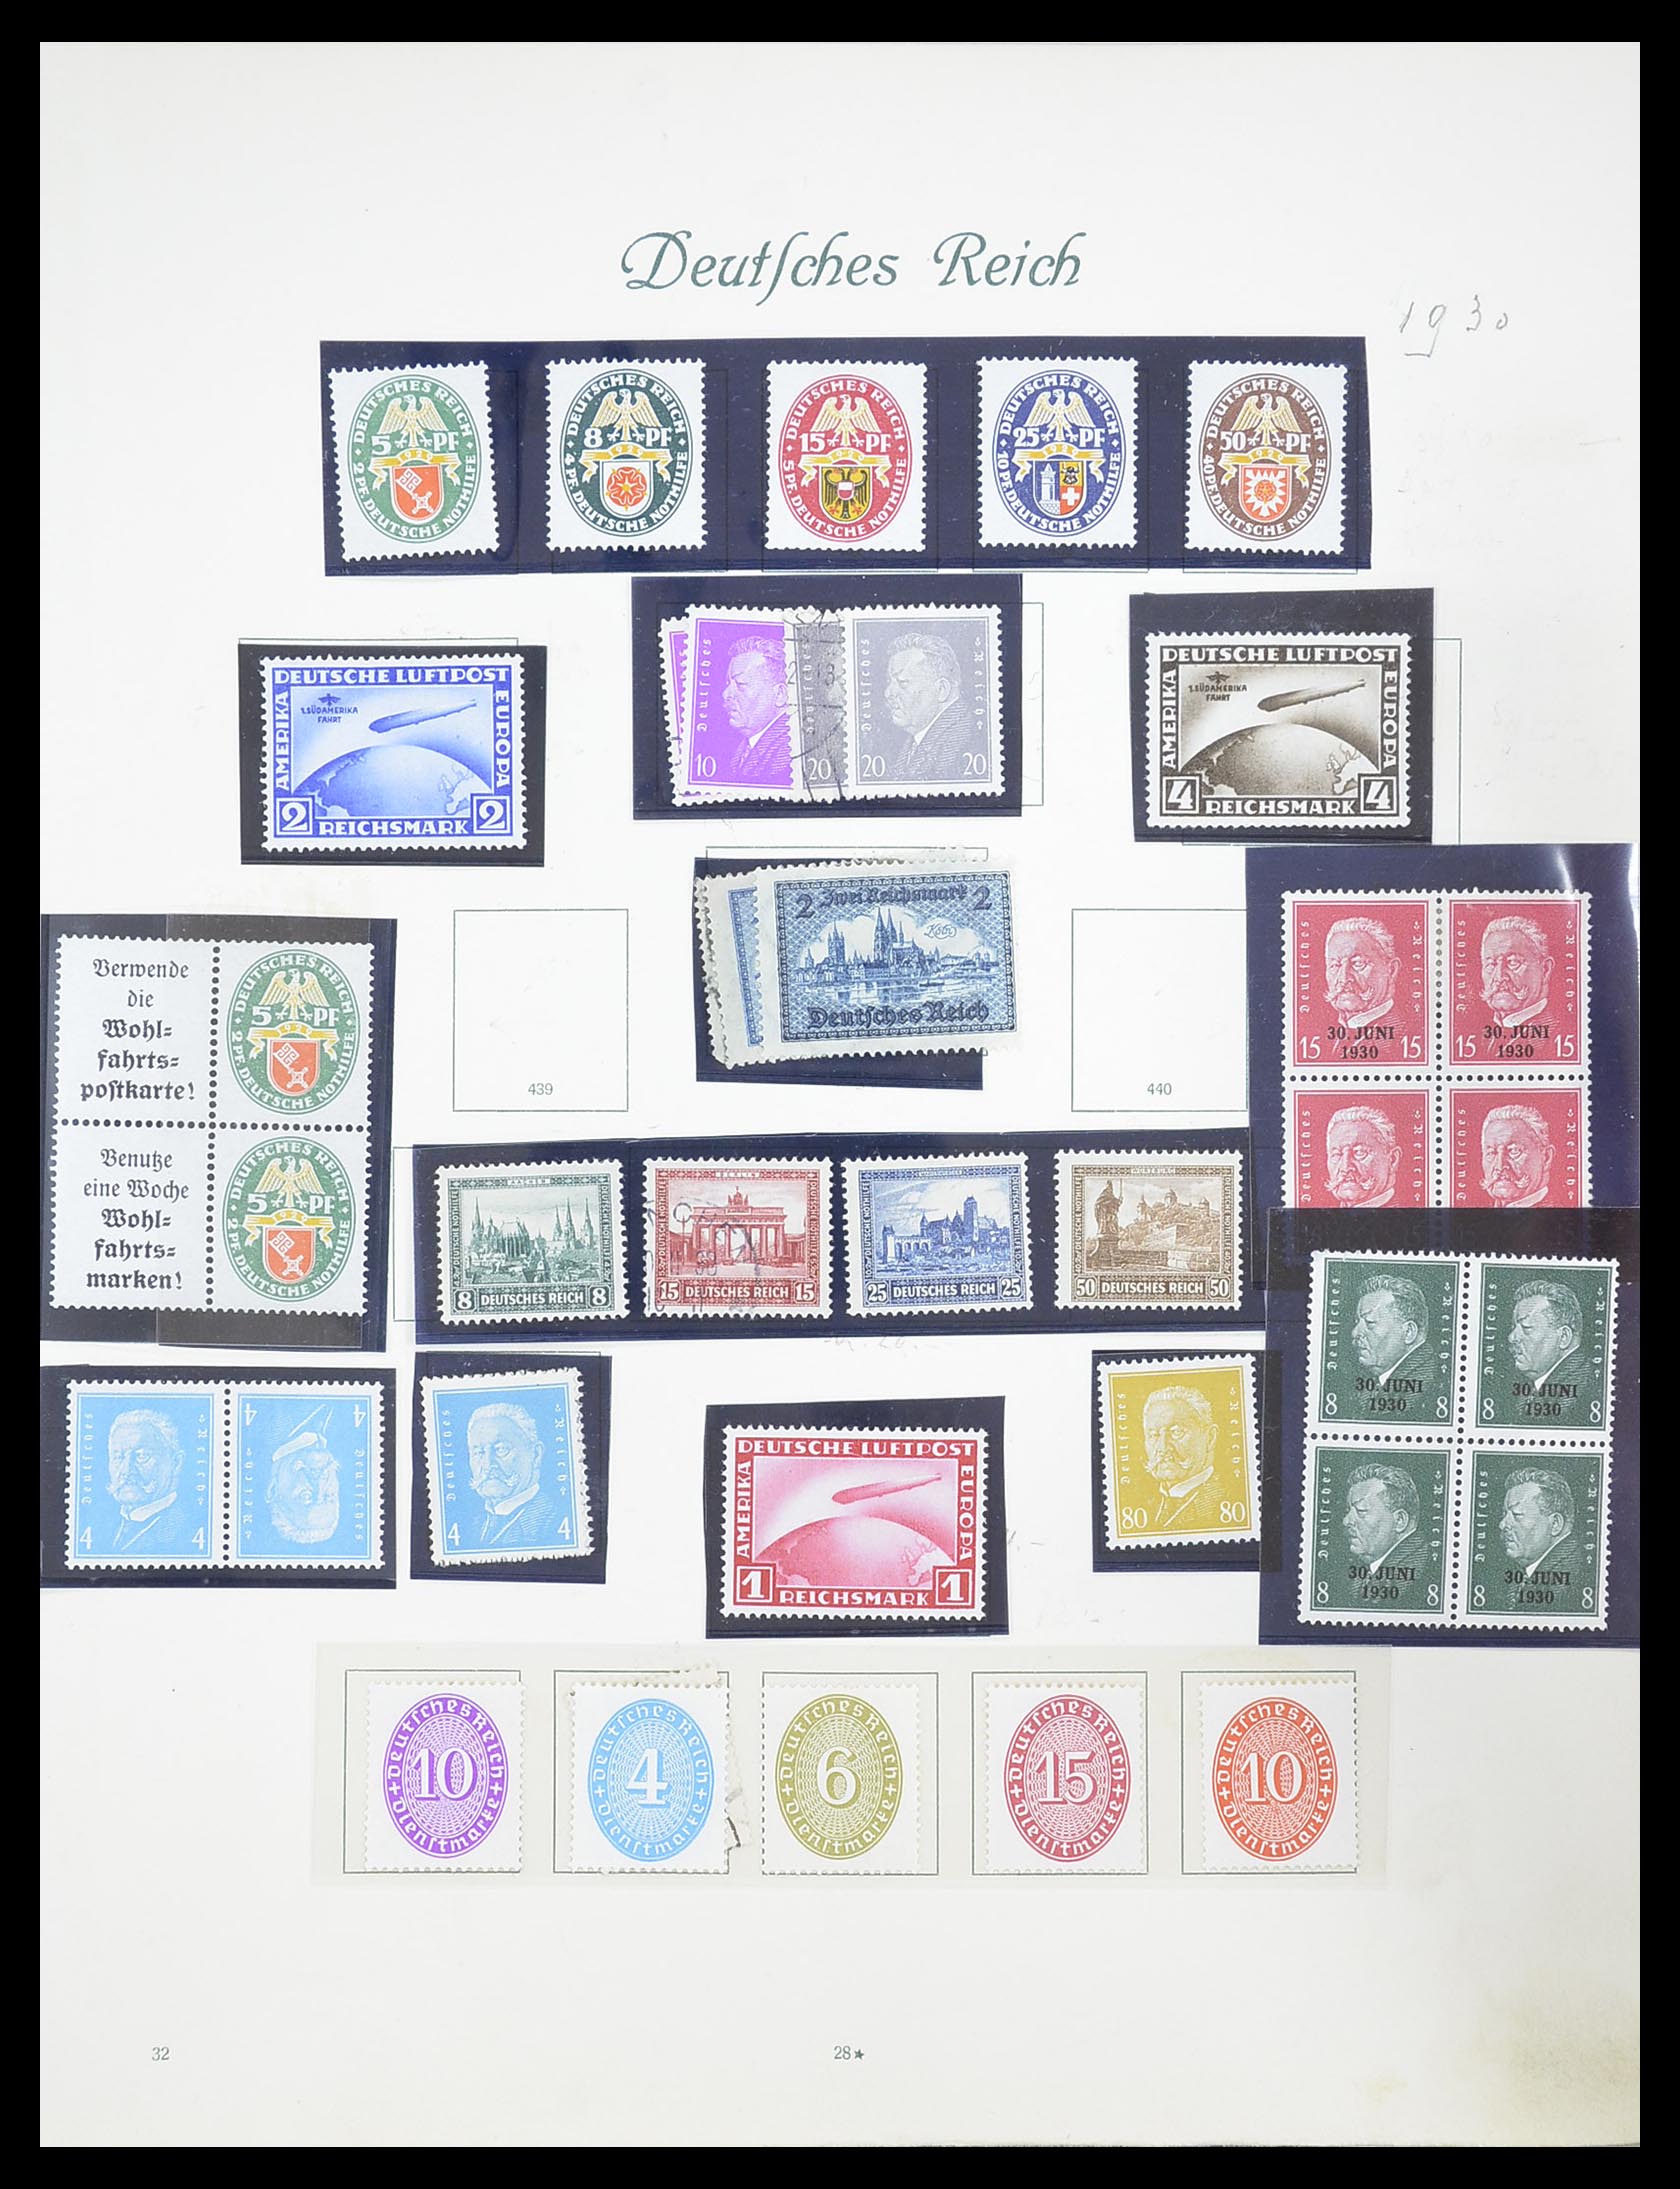 33380 029 - Stamp collection 33380 German Reich 1872-1945.